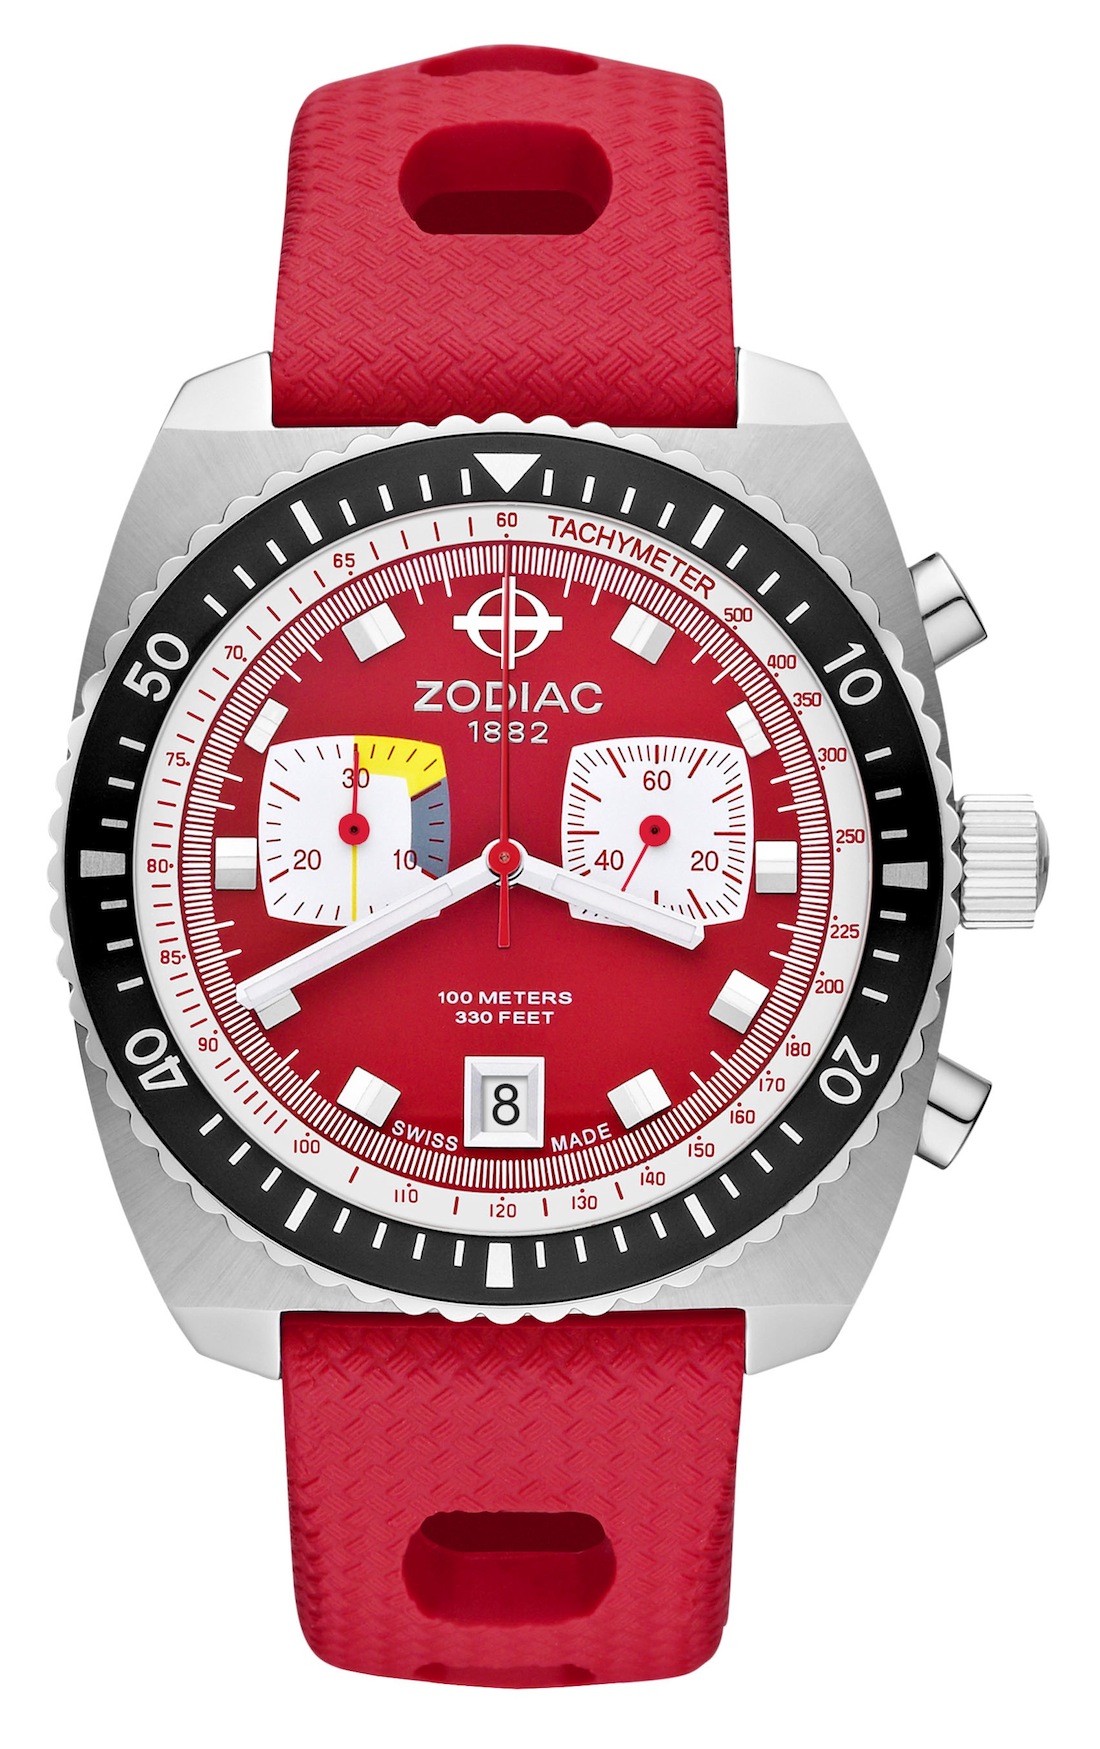 Zodiac Sea Dragon Limited Edition Chronograph